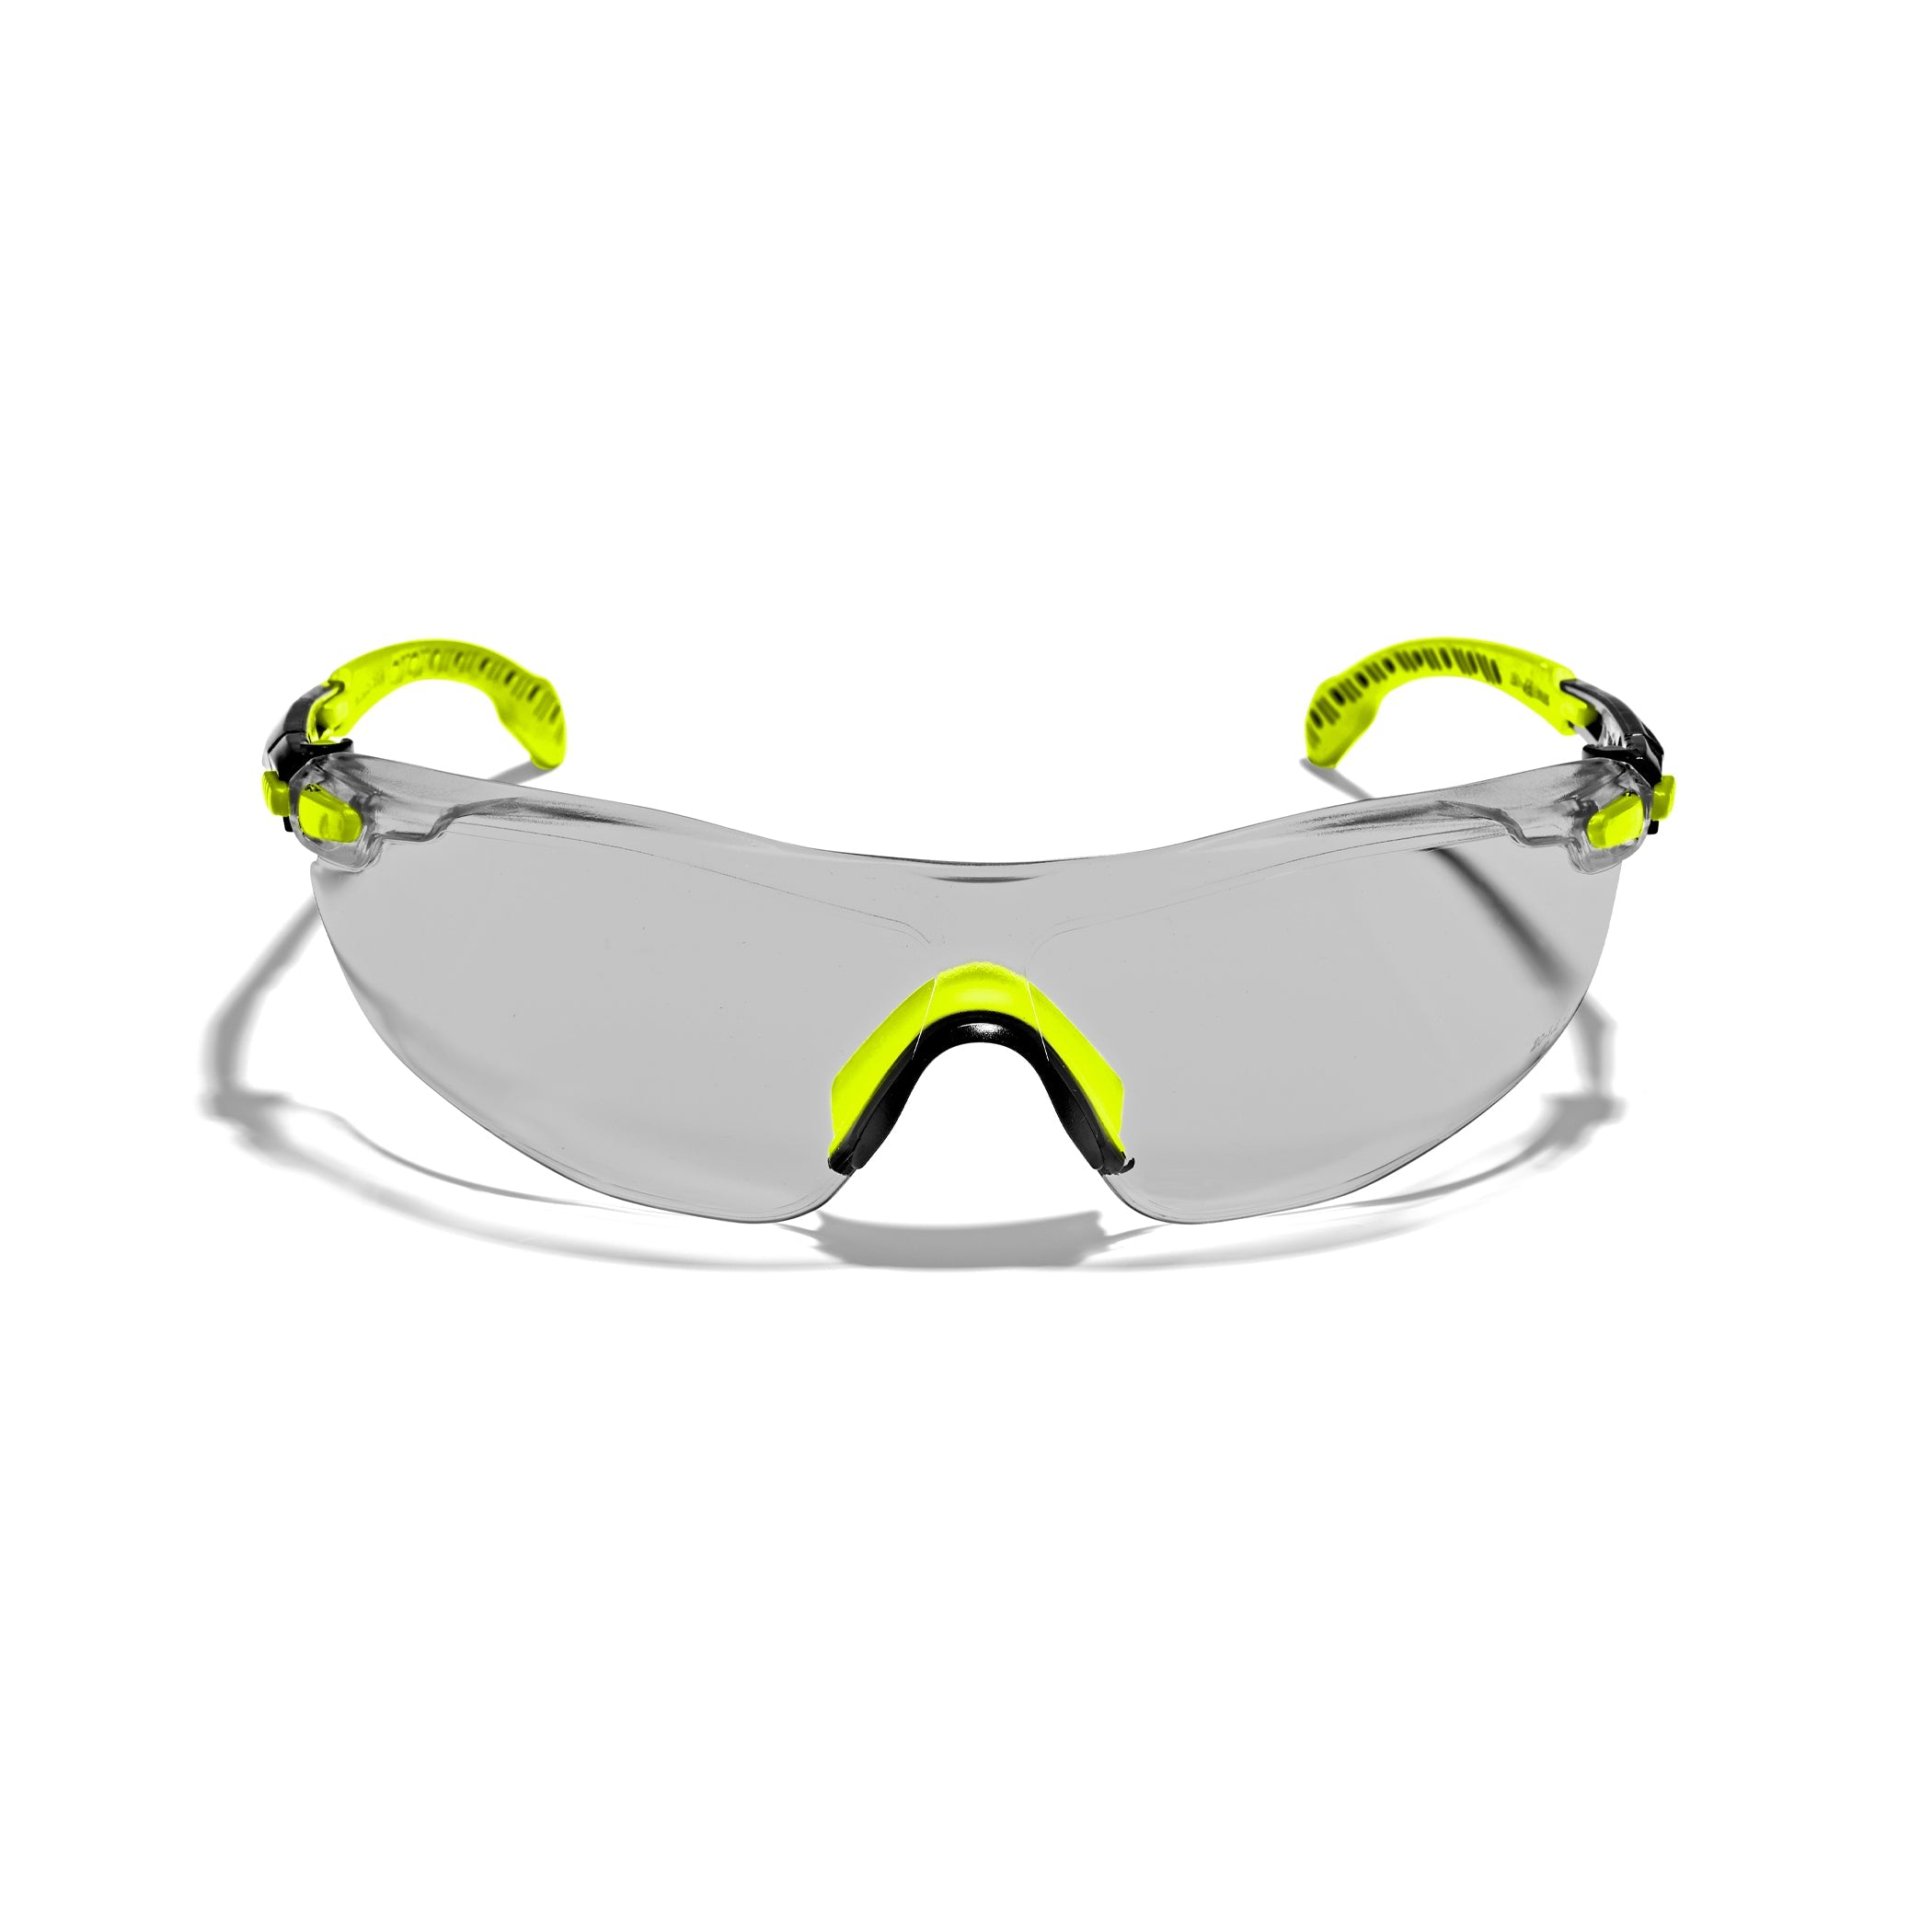 Optifense VS3 Anti Fog, Premium Smoked Safety Glasses, ANSI Z87+ (Color: Safety Yellow)